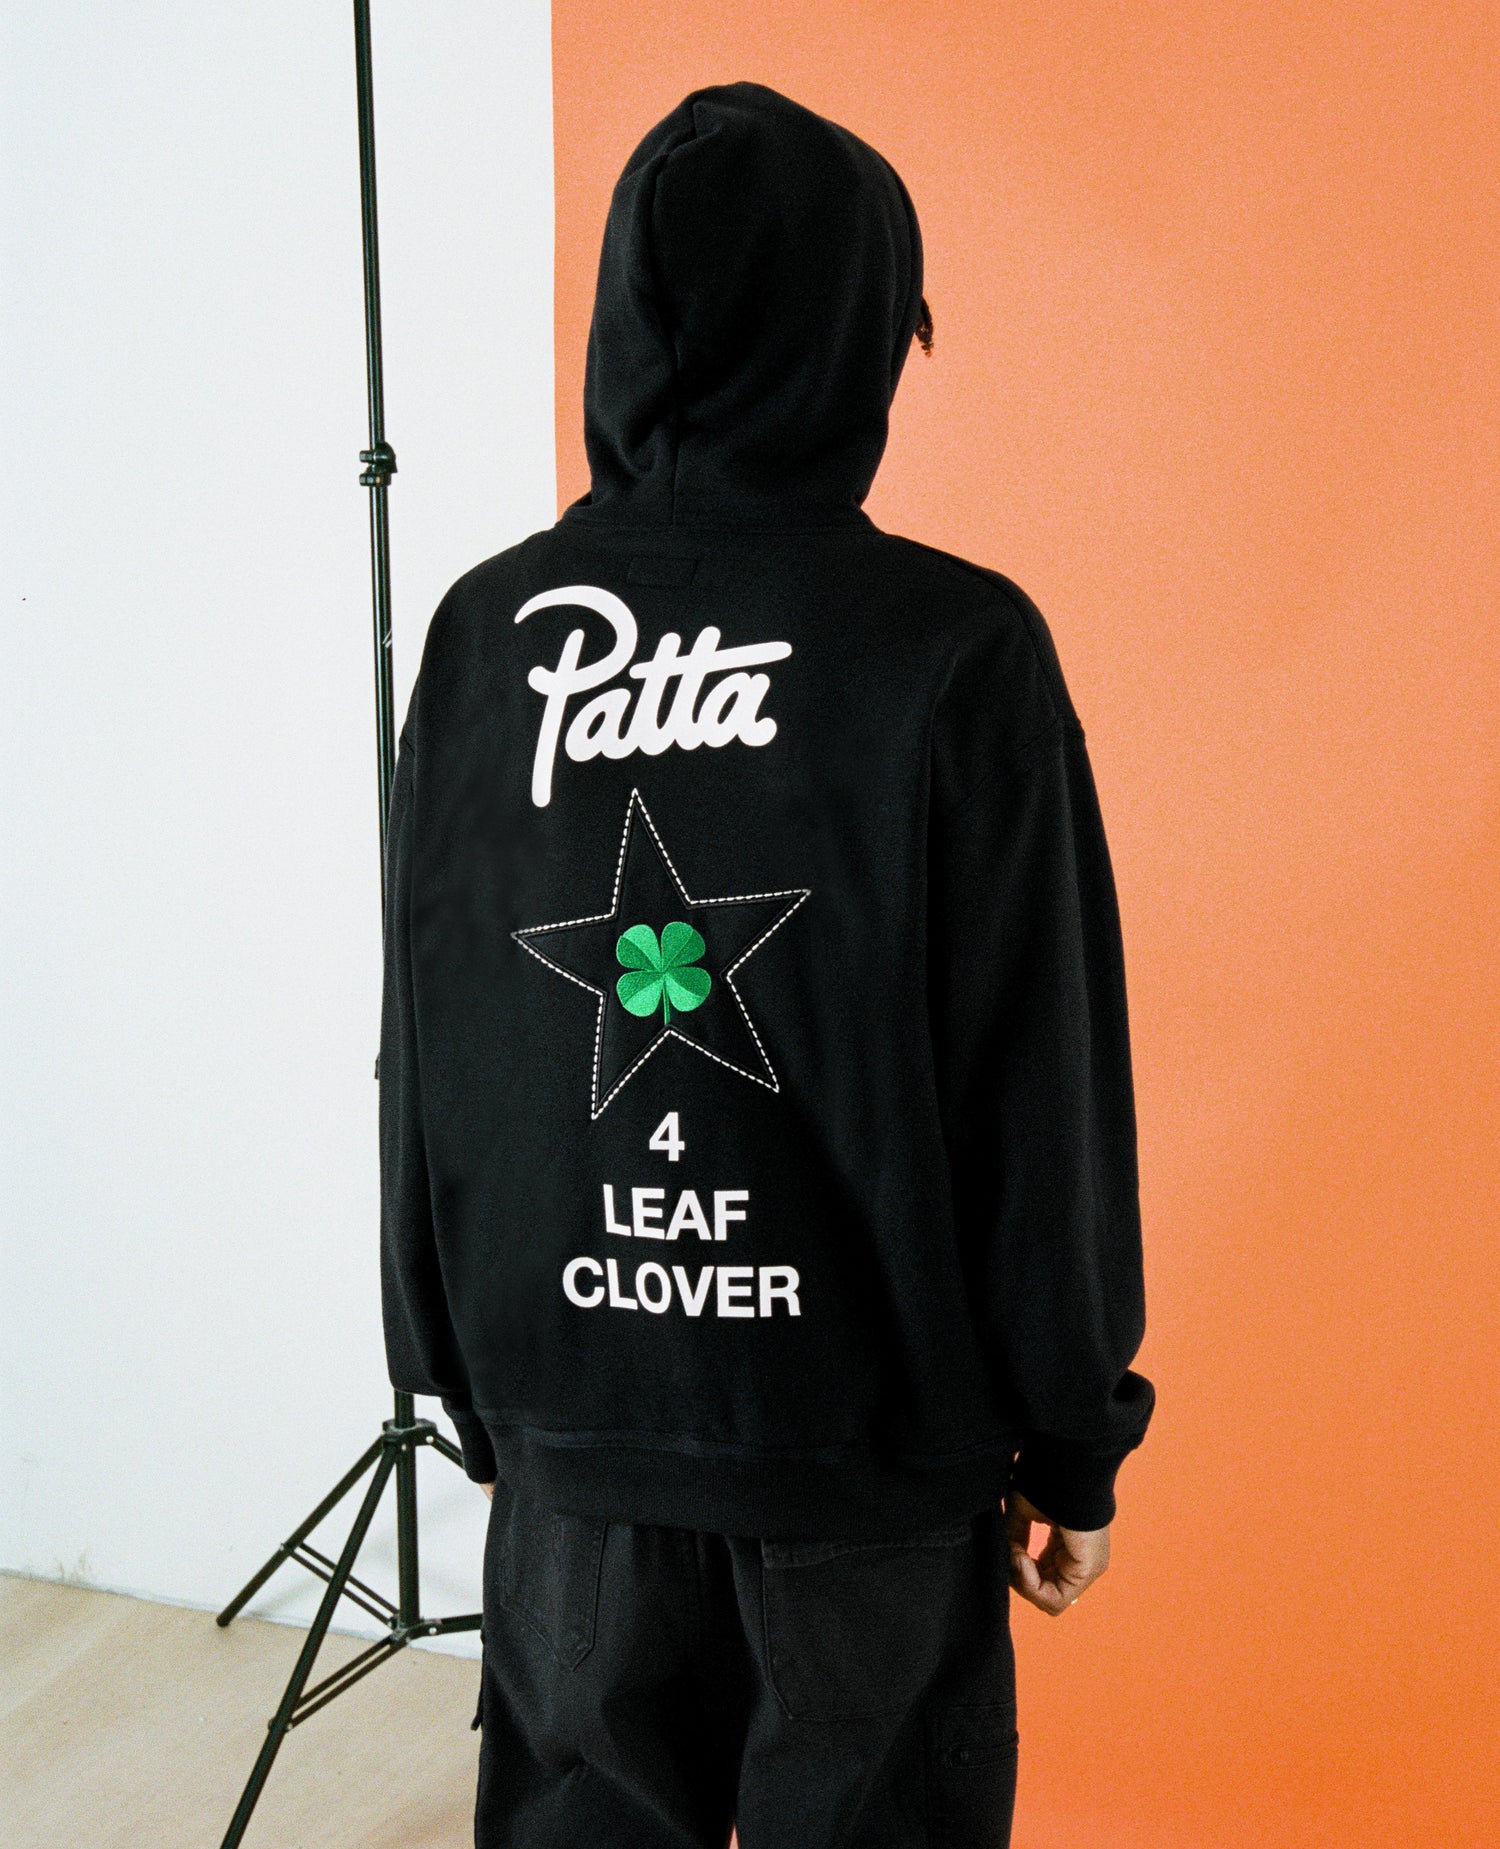 Patta x Converse 4 Leaf Clover Hooded Sweater (Black)